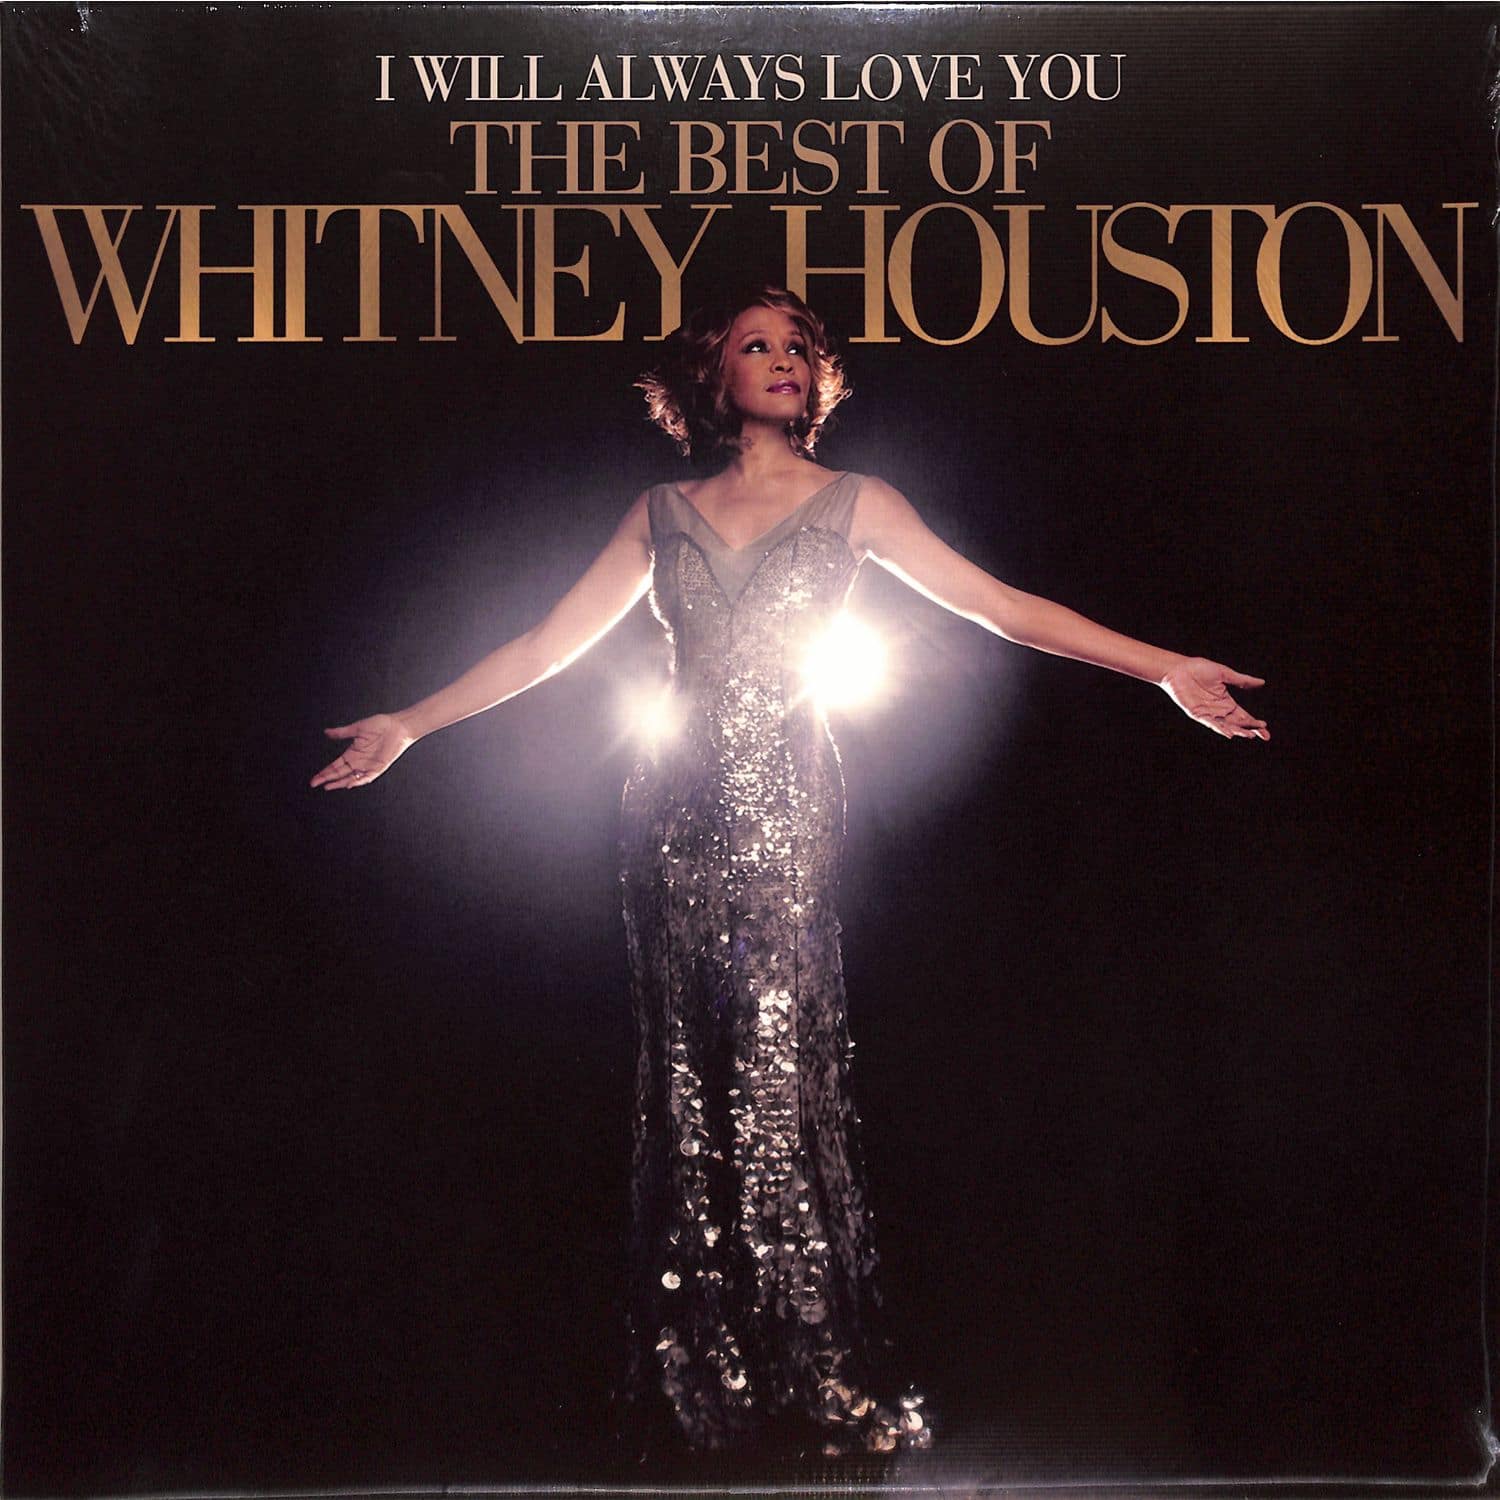 Whitney Houston - I WILL ALWAYS LOVE YOU: THE BEST OF WHITNEY HOUSTON 